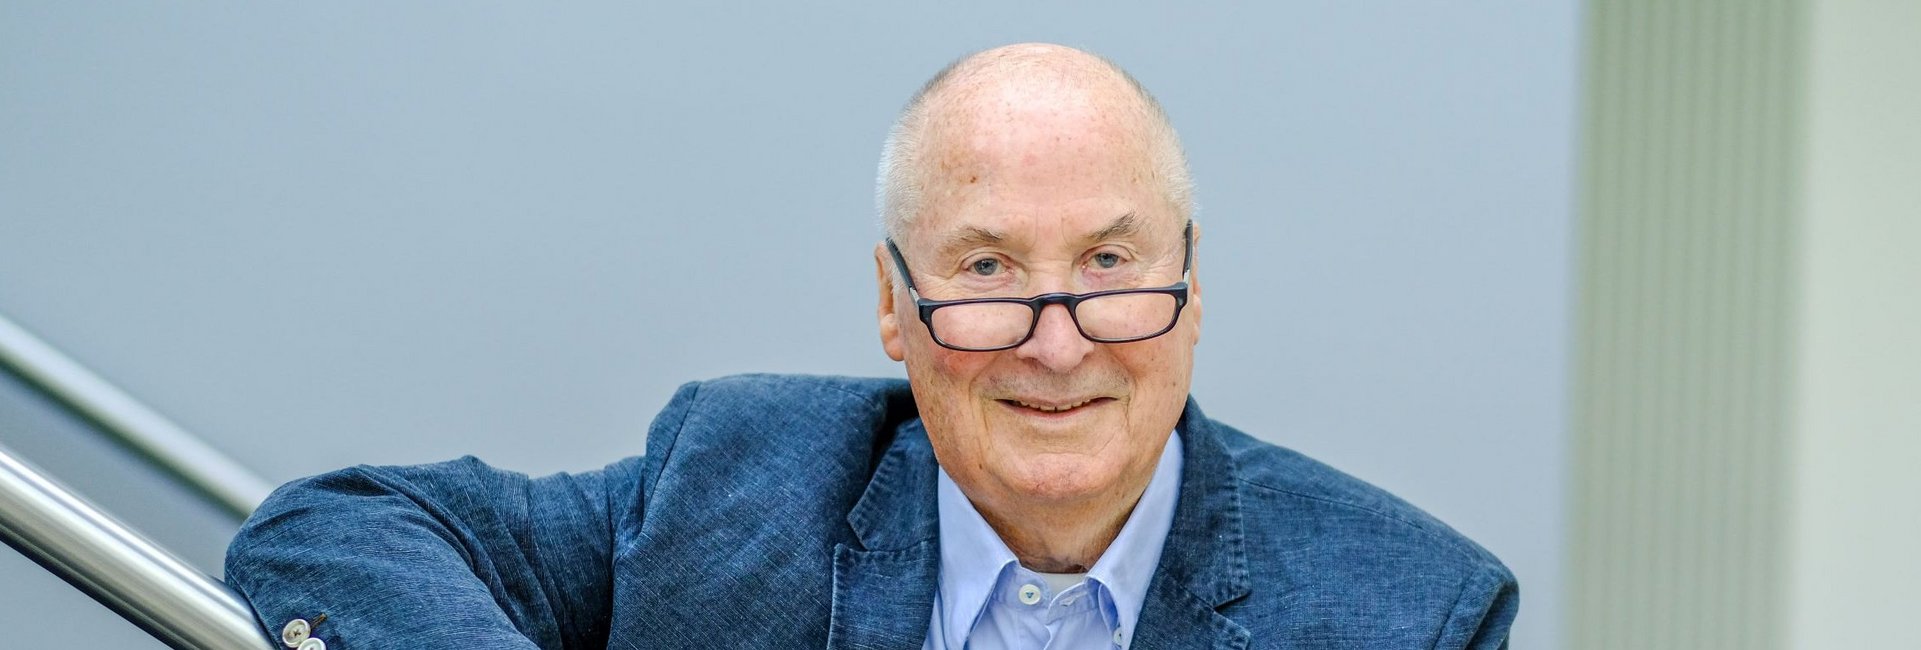 Horst-Werner Maier-Hunke, Vorsitzender des Märkischen Arbeitgeberverbandes